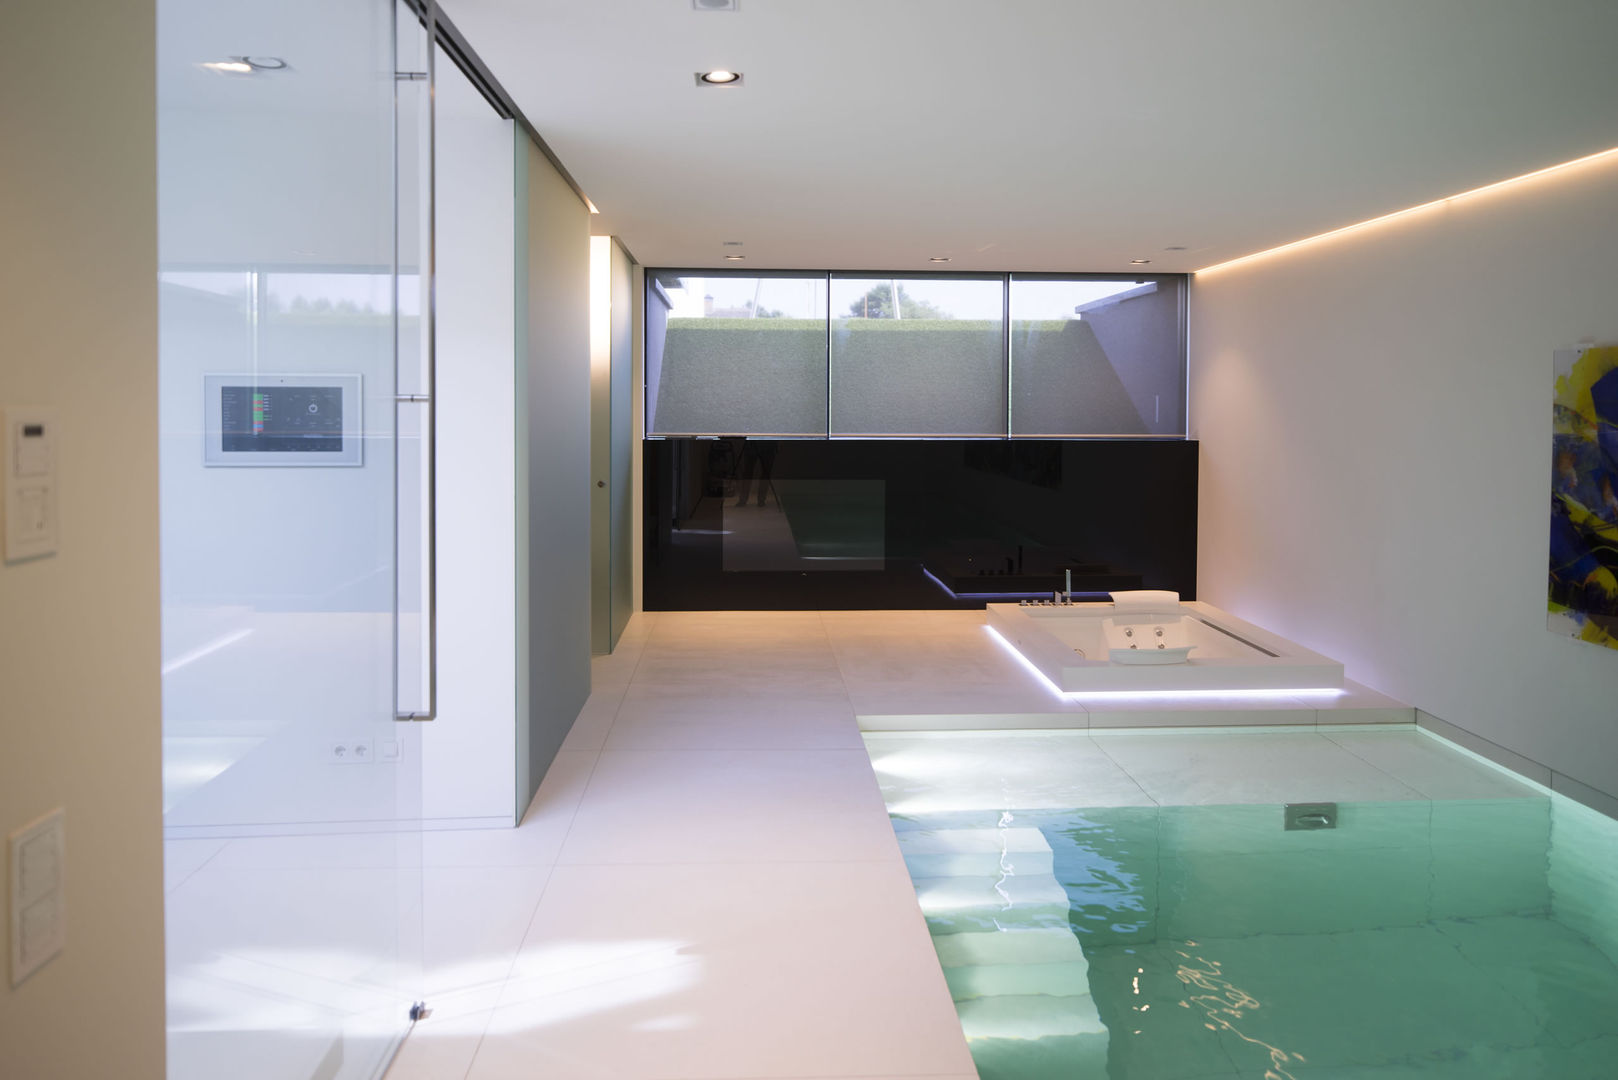 “G-house, villa met gastenverblijf aan de Reeuwijkse Plas” , Lab32 architecten Lab32 architecten Piscinas de estilo moderno